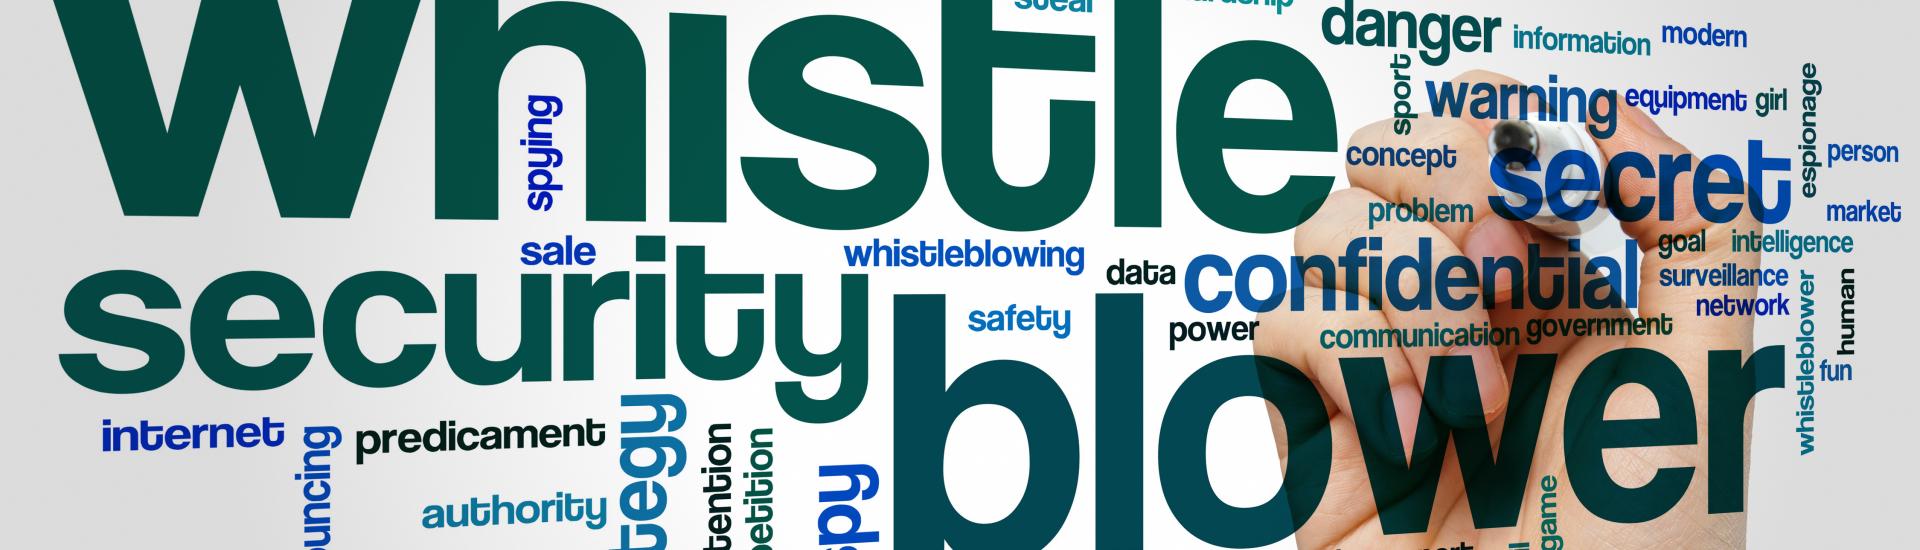 Whistleblowing: E-Learning zum Hinweisgeberschutzgesetz